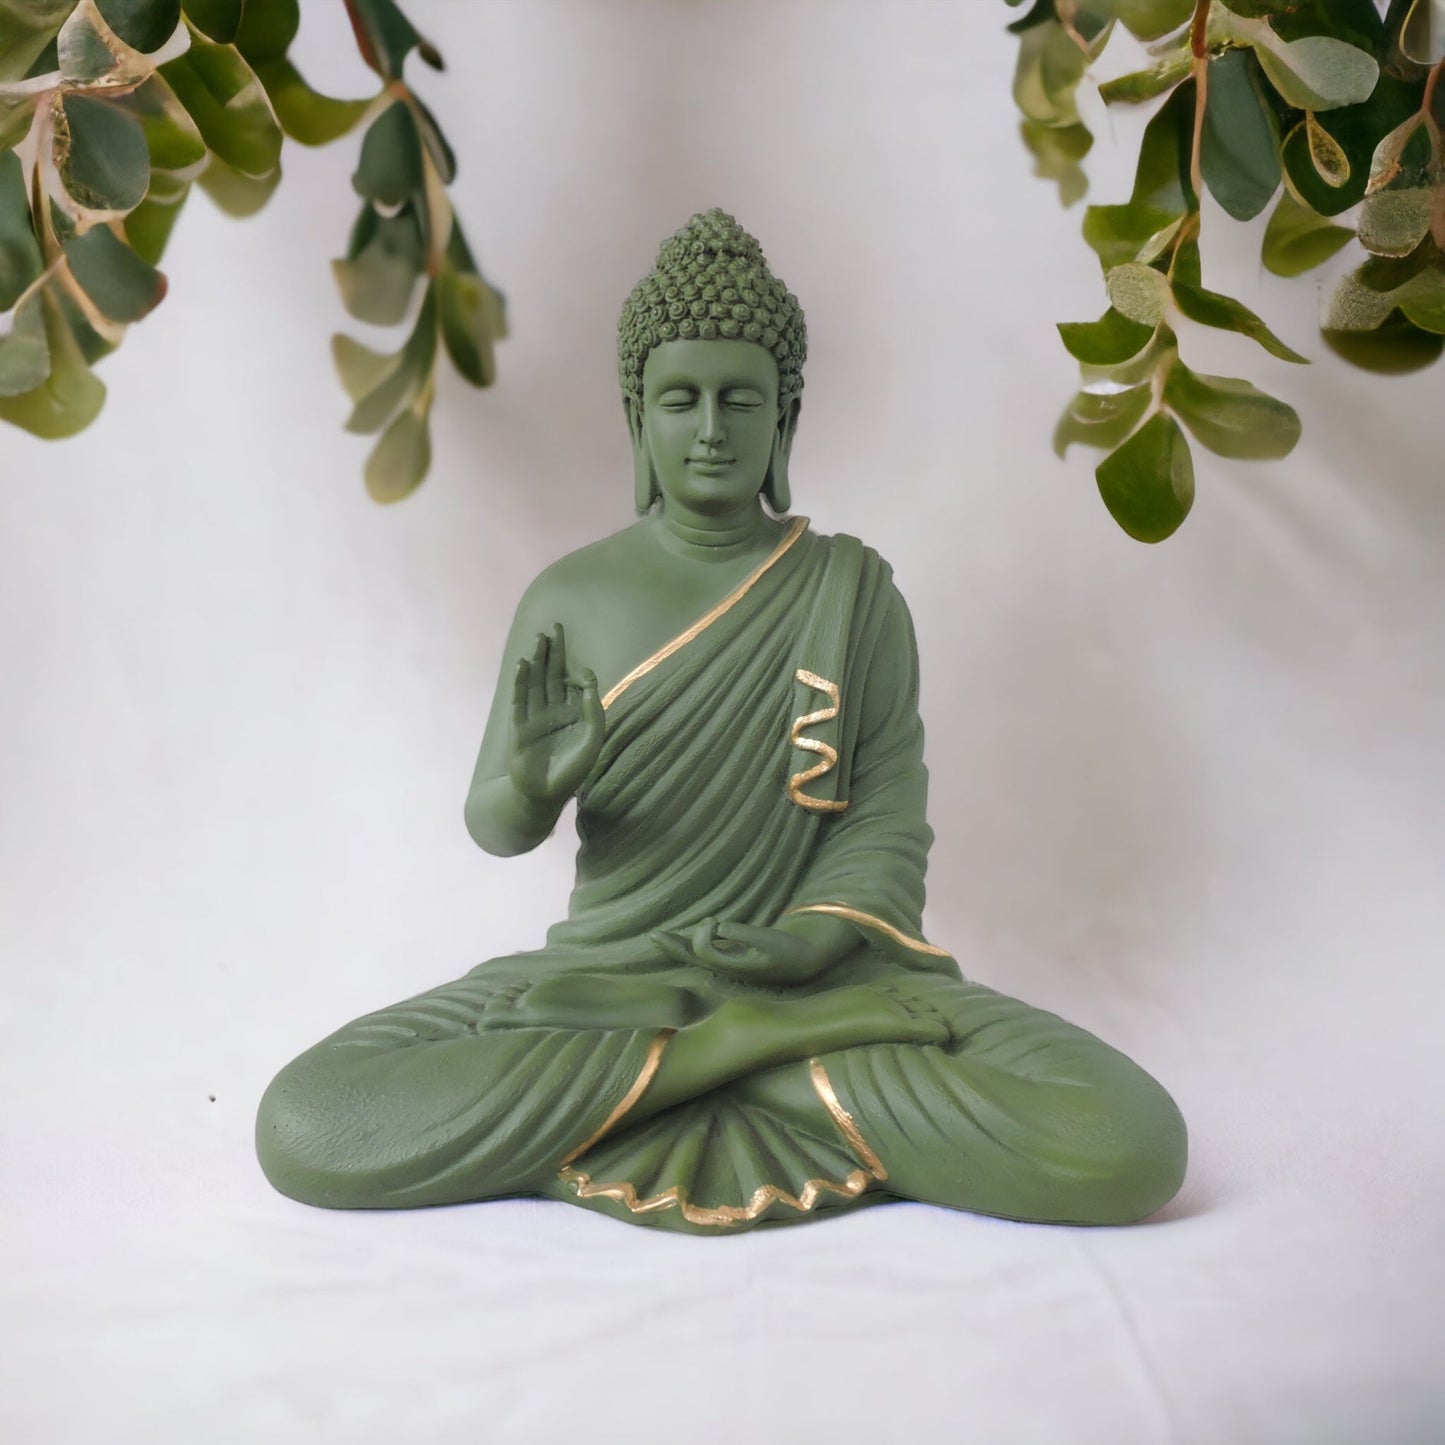 Blessing Buddha / Green by Satgurus